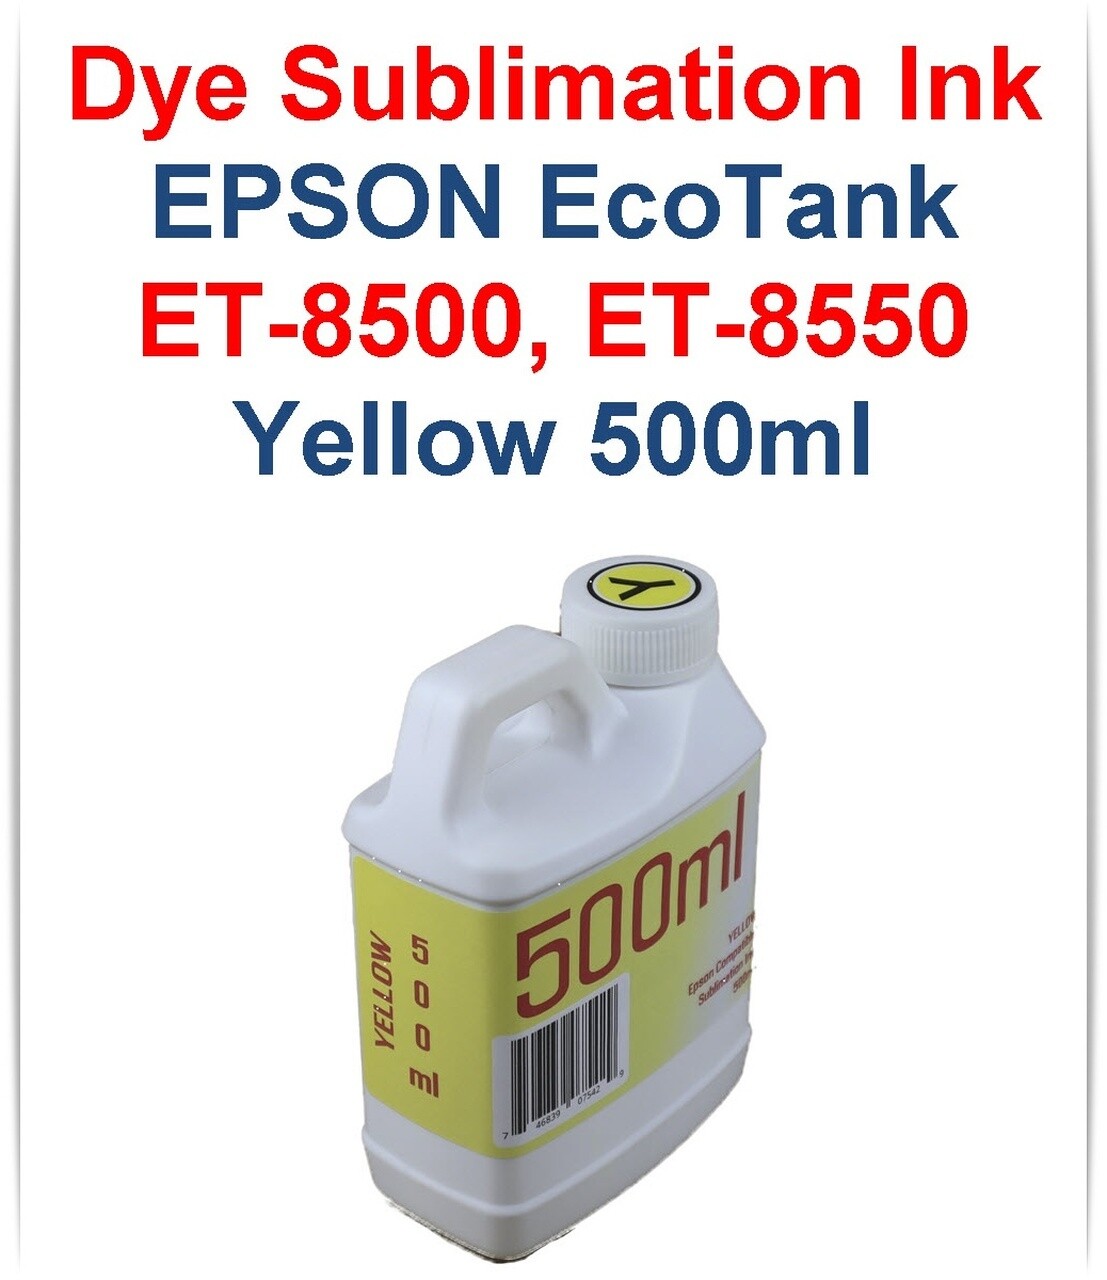 Yellow Dye Sublimation Ink 500ml bottle for EPSON EcoTank ET-8500 ET-8550 printers